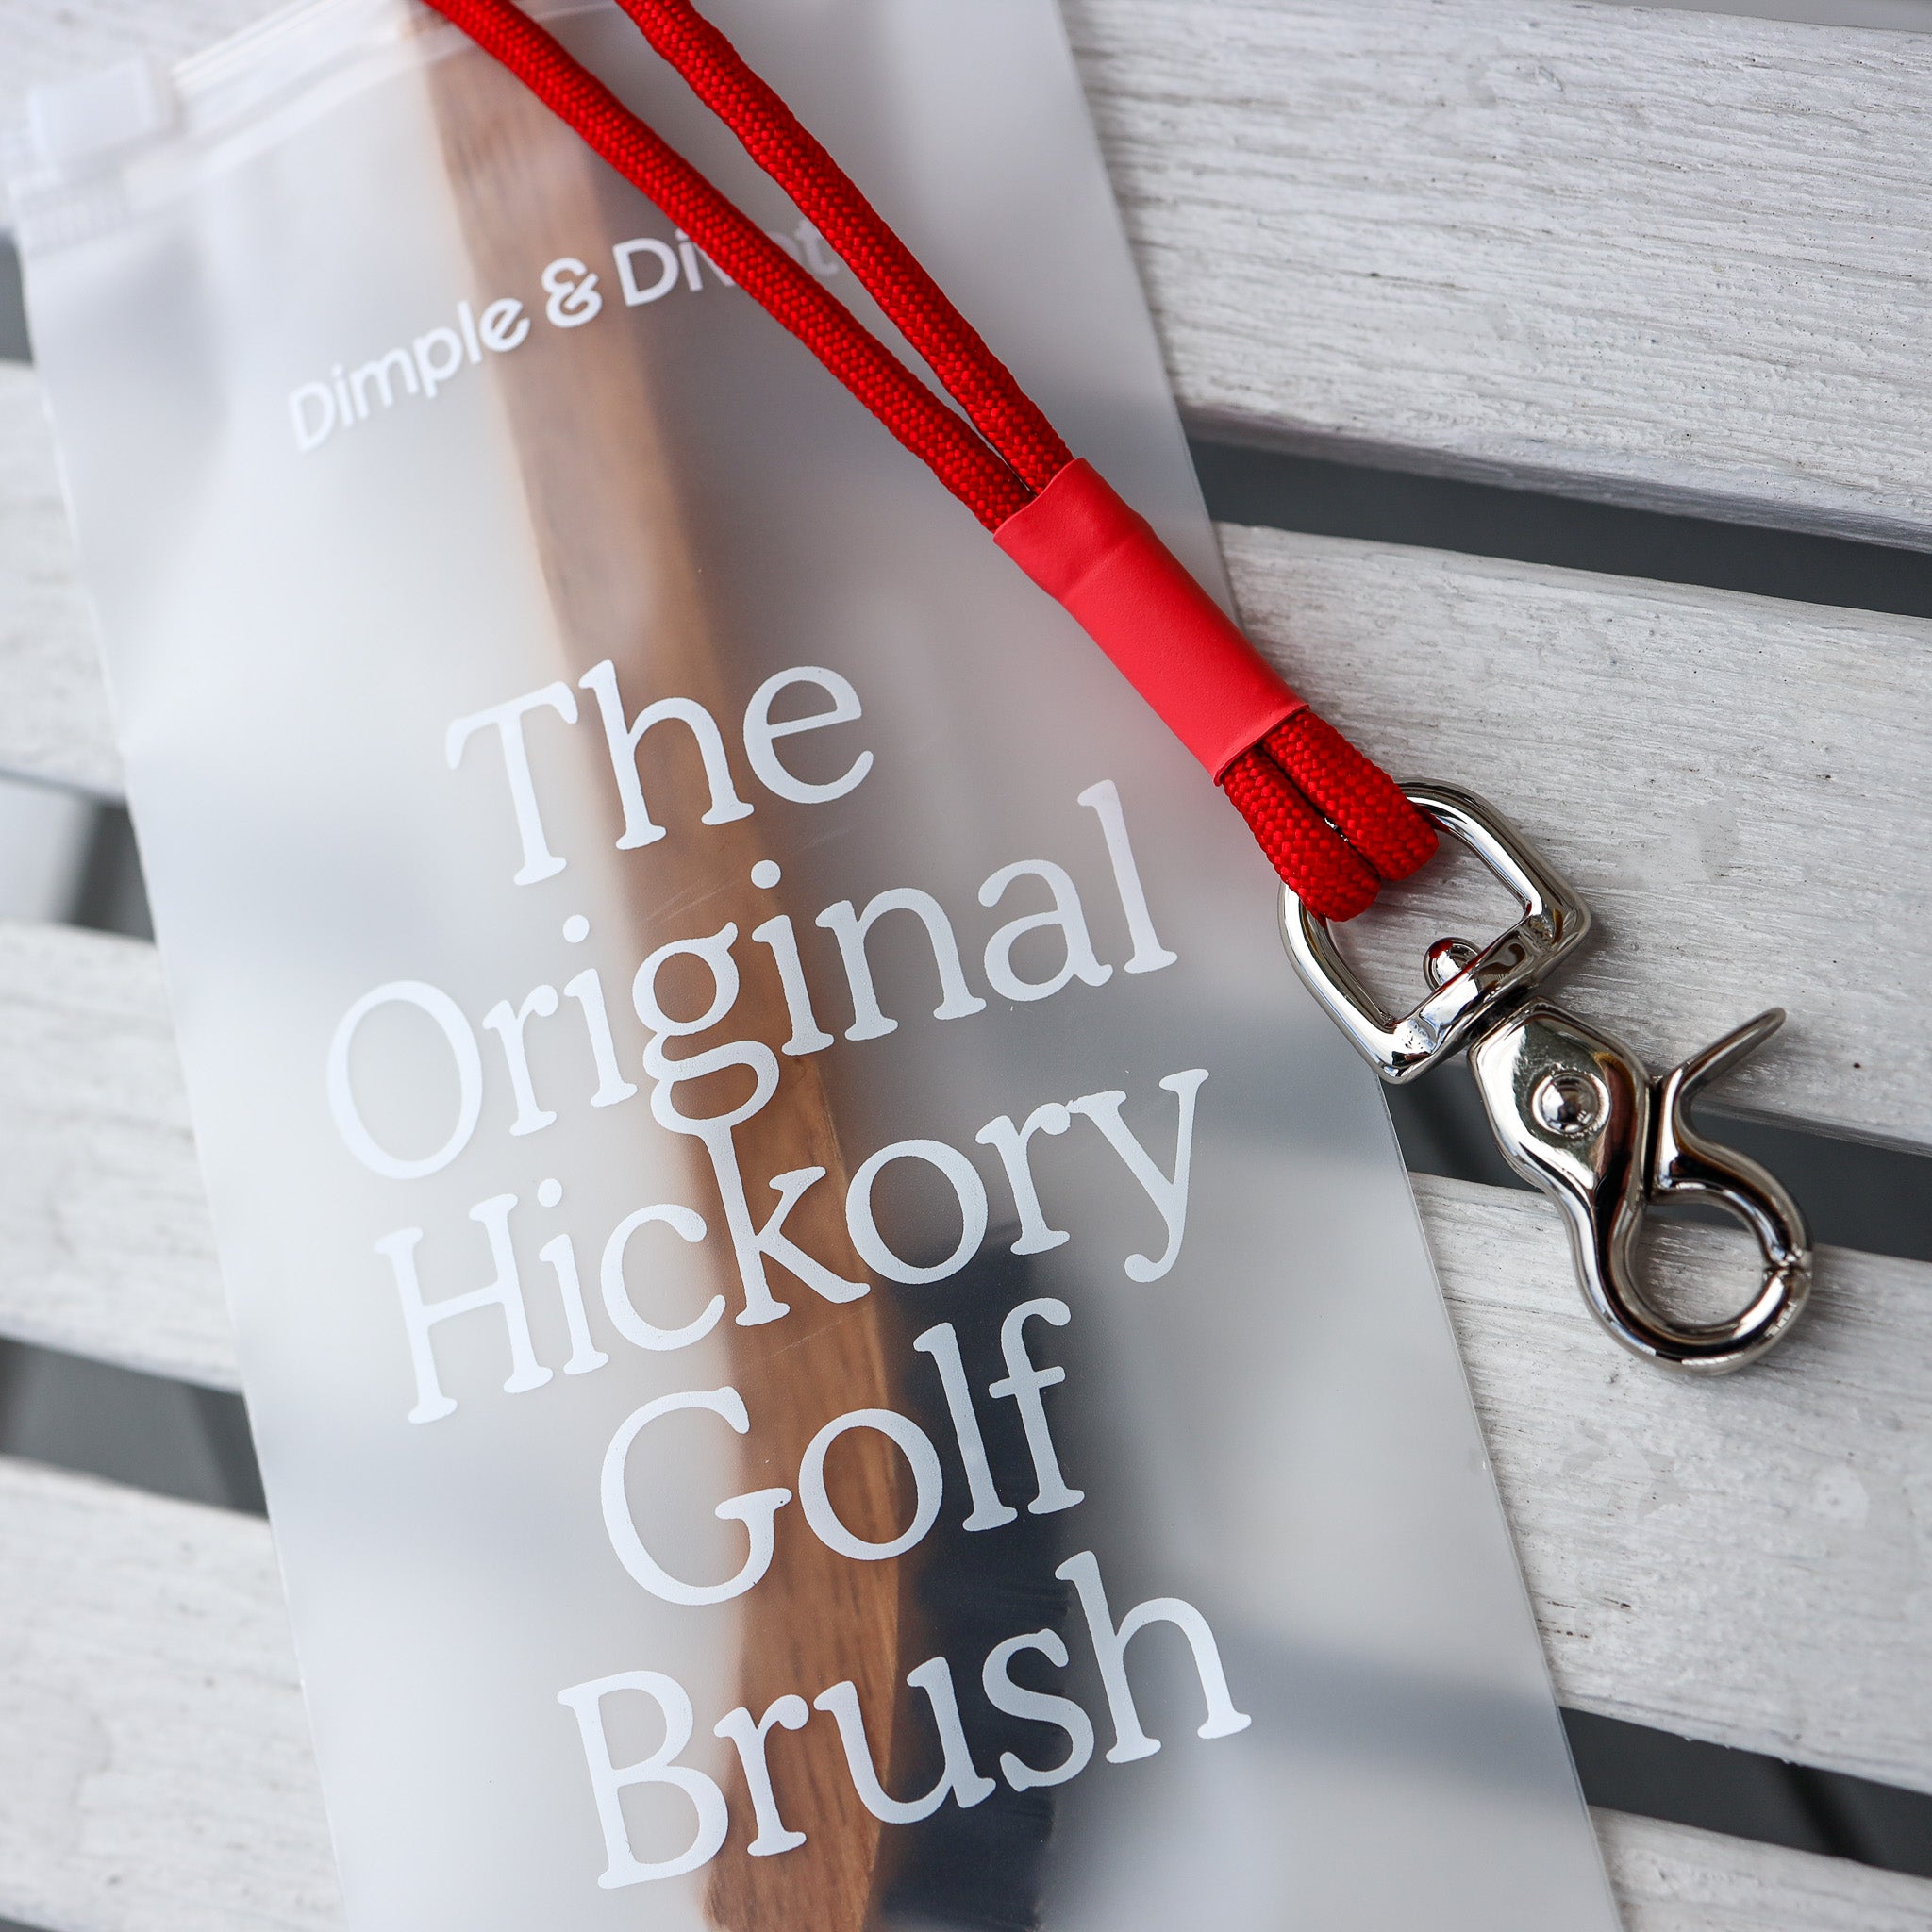 Hazard - Hickory Golf Brush